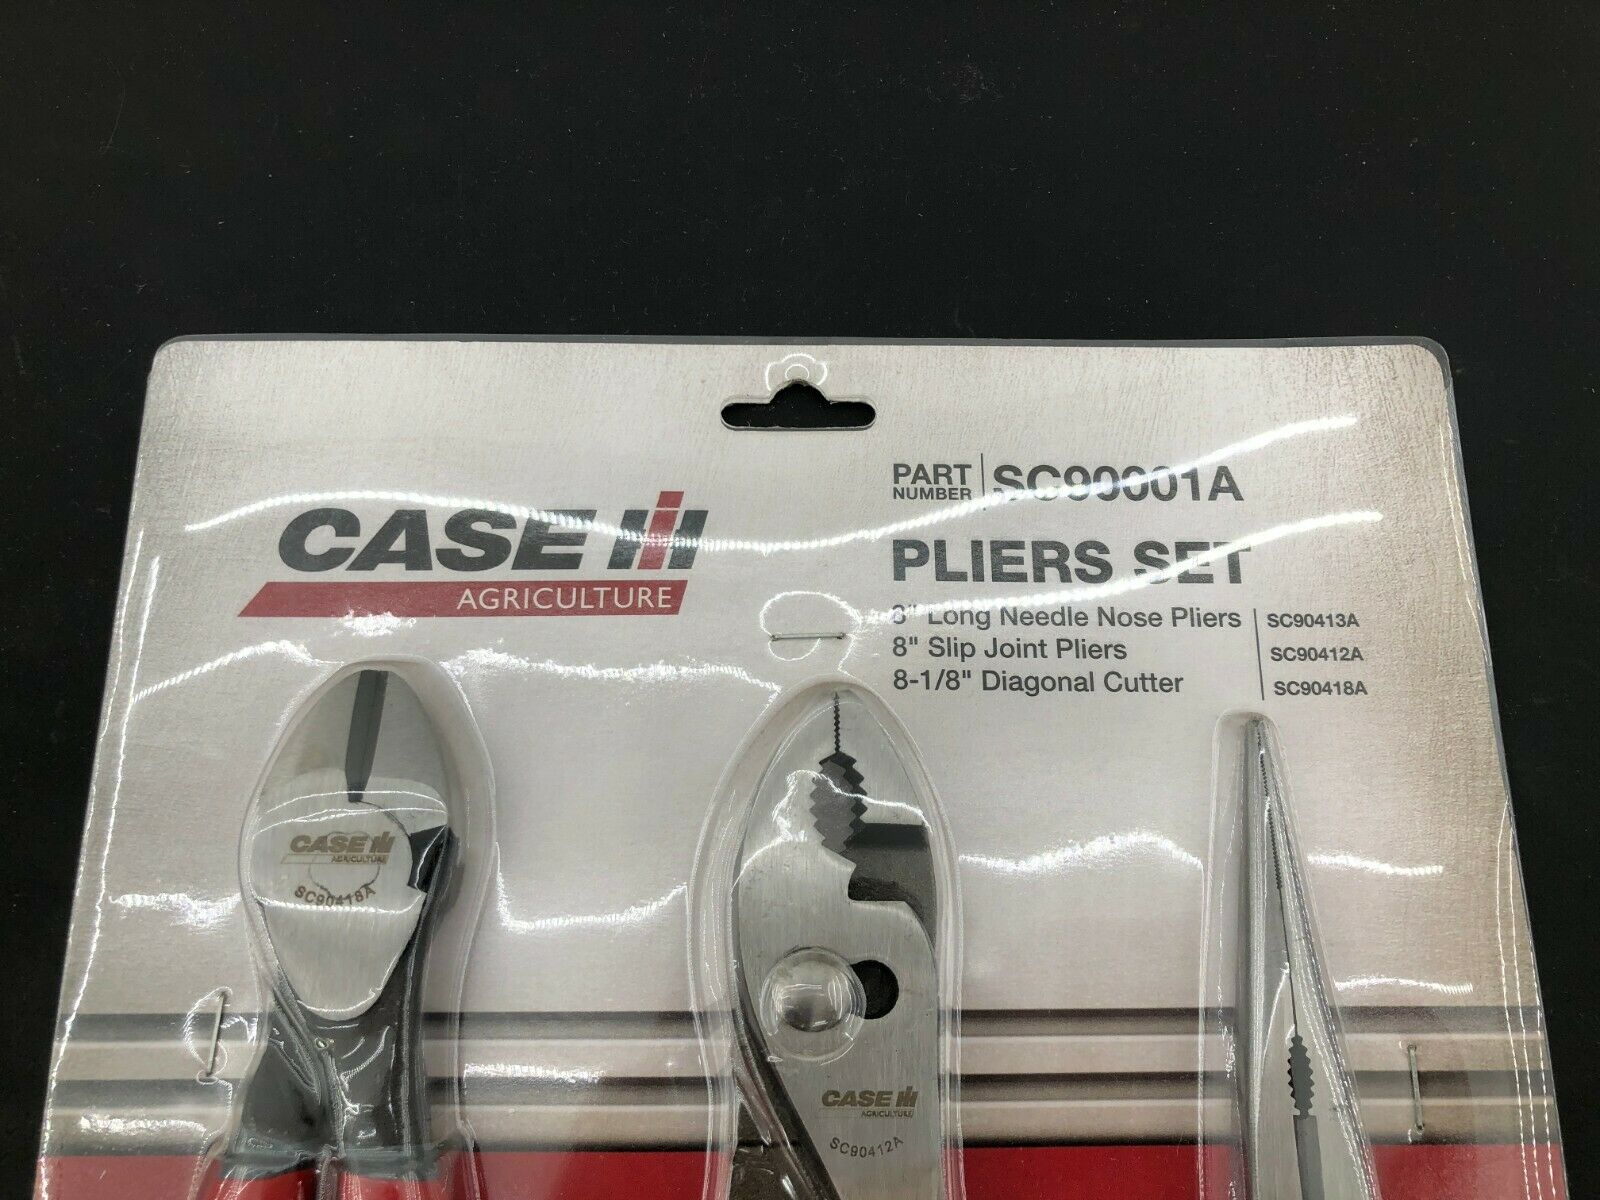 Case IH #SC90001A CASE IH Pliers Set - Pliers Set